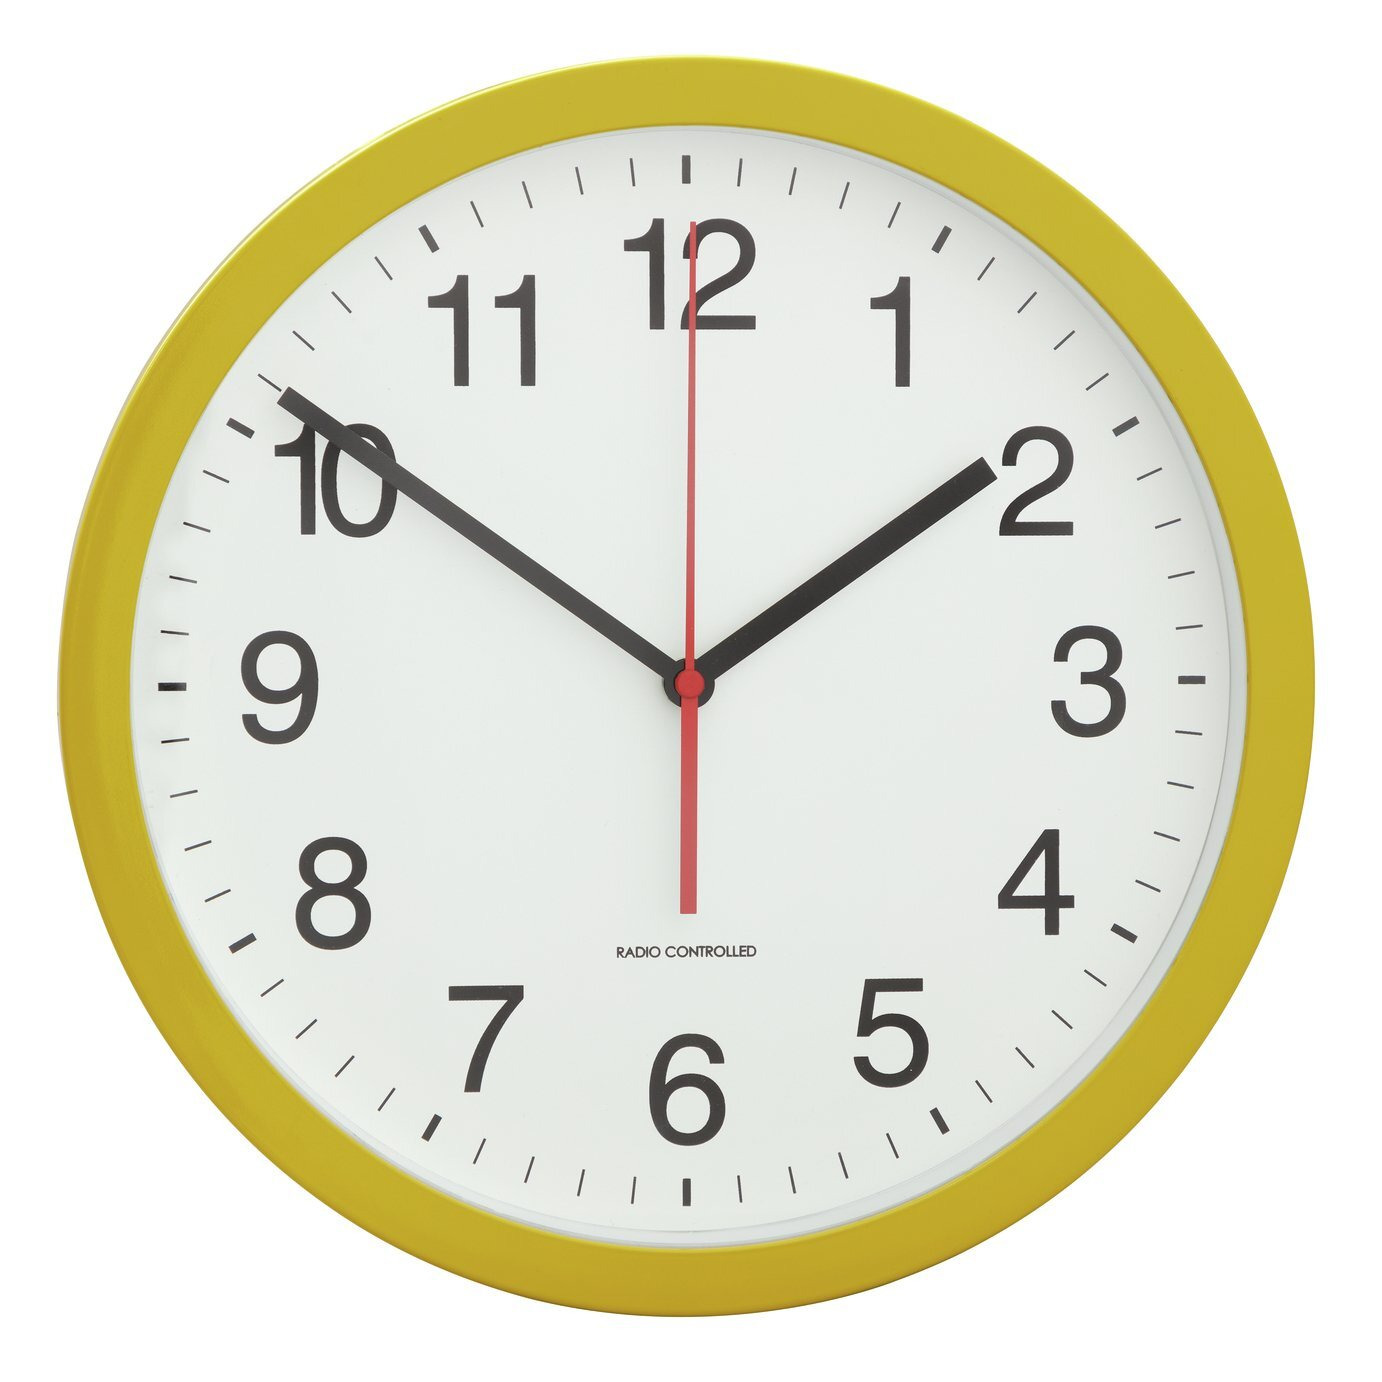 Argos Home Radio Controlled Wall Clock - Mustard - image 1